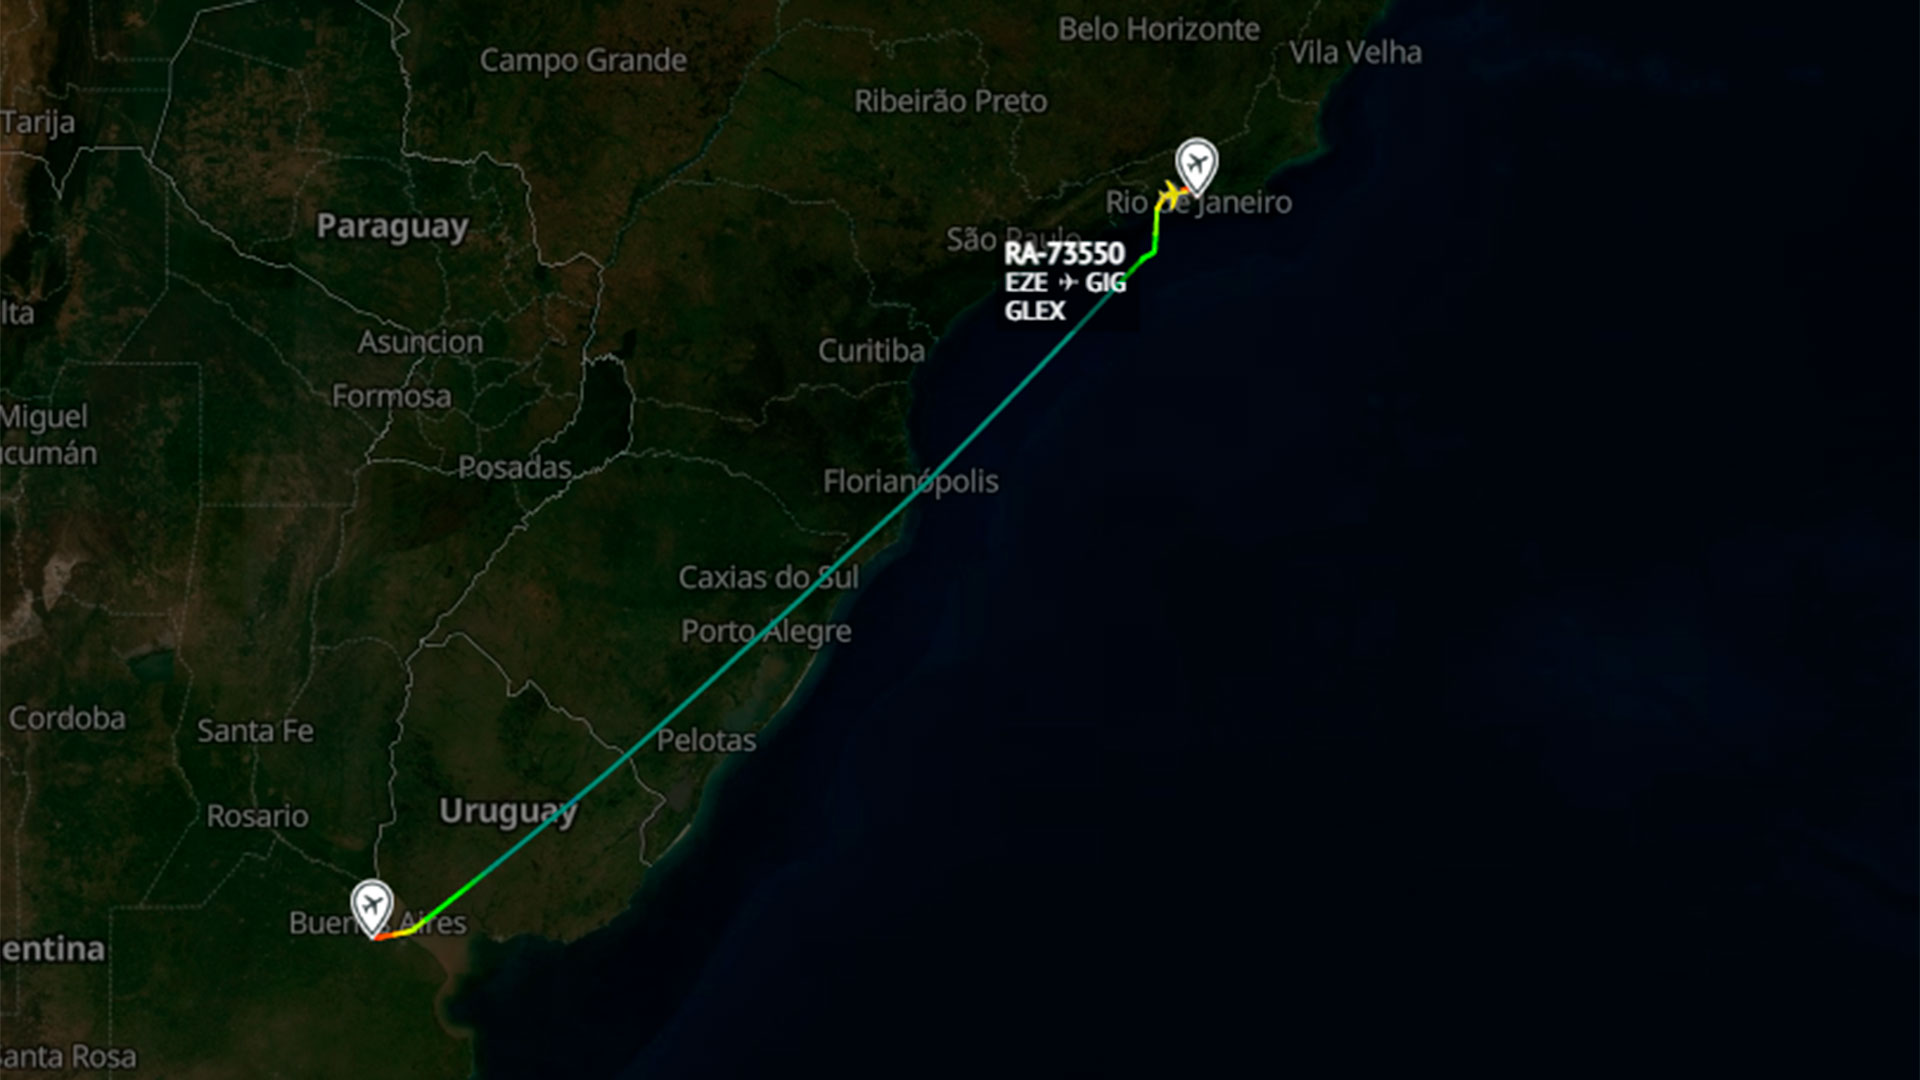 El avión ruso, destino a Río de Janeiro